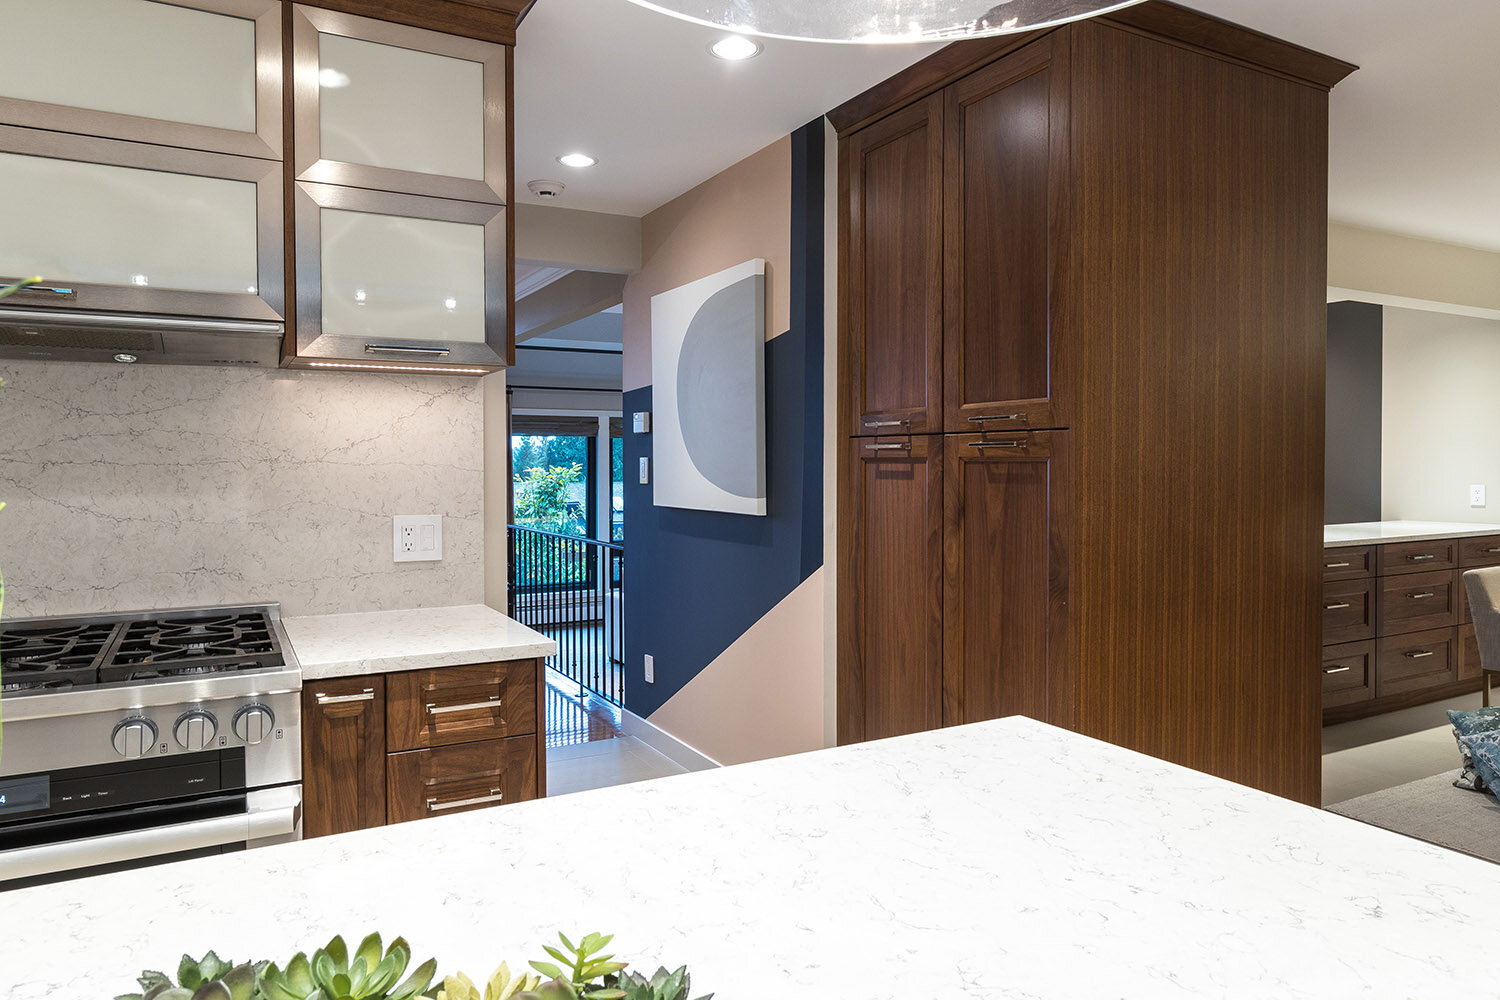 wall-design-decor-kitchen-elegant-custom-design-artful-interior-susan-front-view-3.jpg